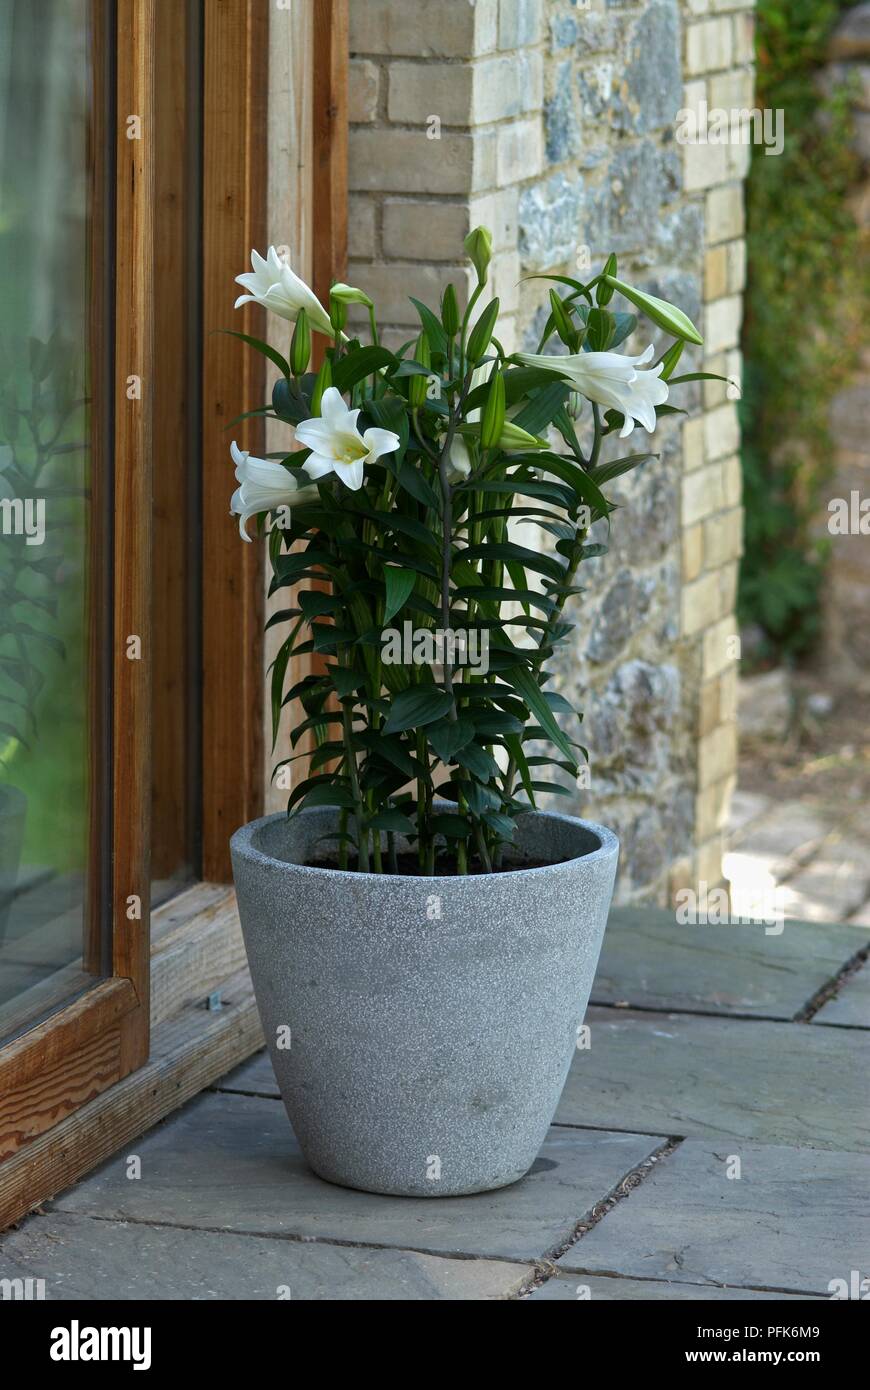 Il Lilium longiflorum (Pasqua giglio), in pietra, piante vaso sul patio  Foto stock - Alamy